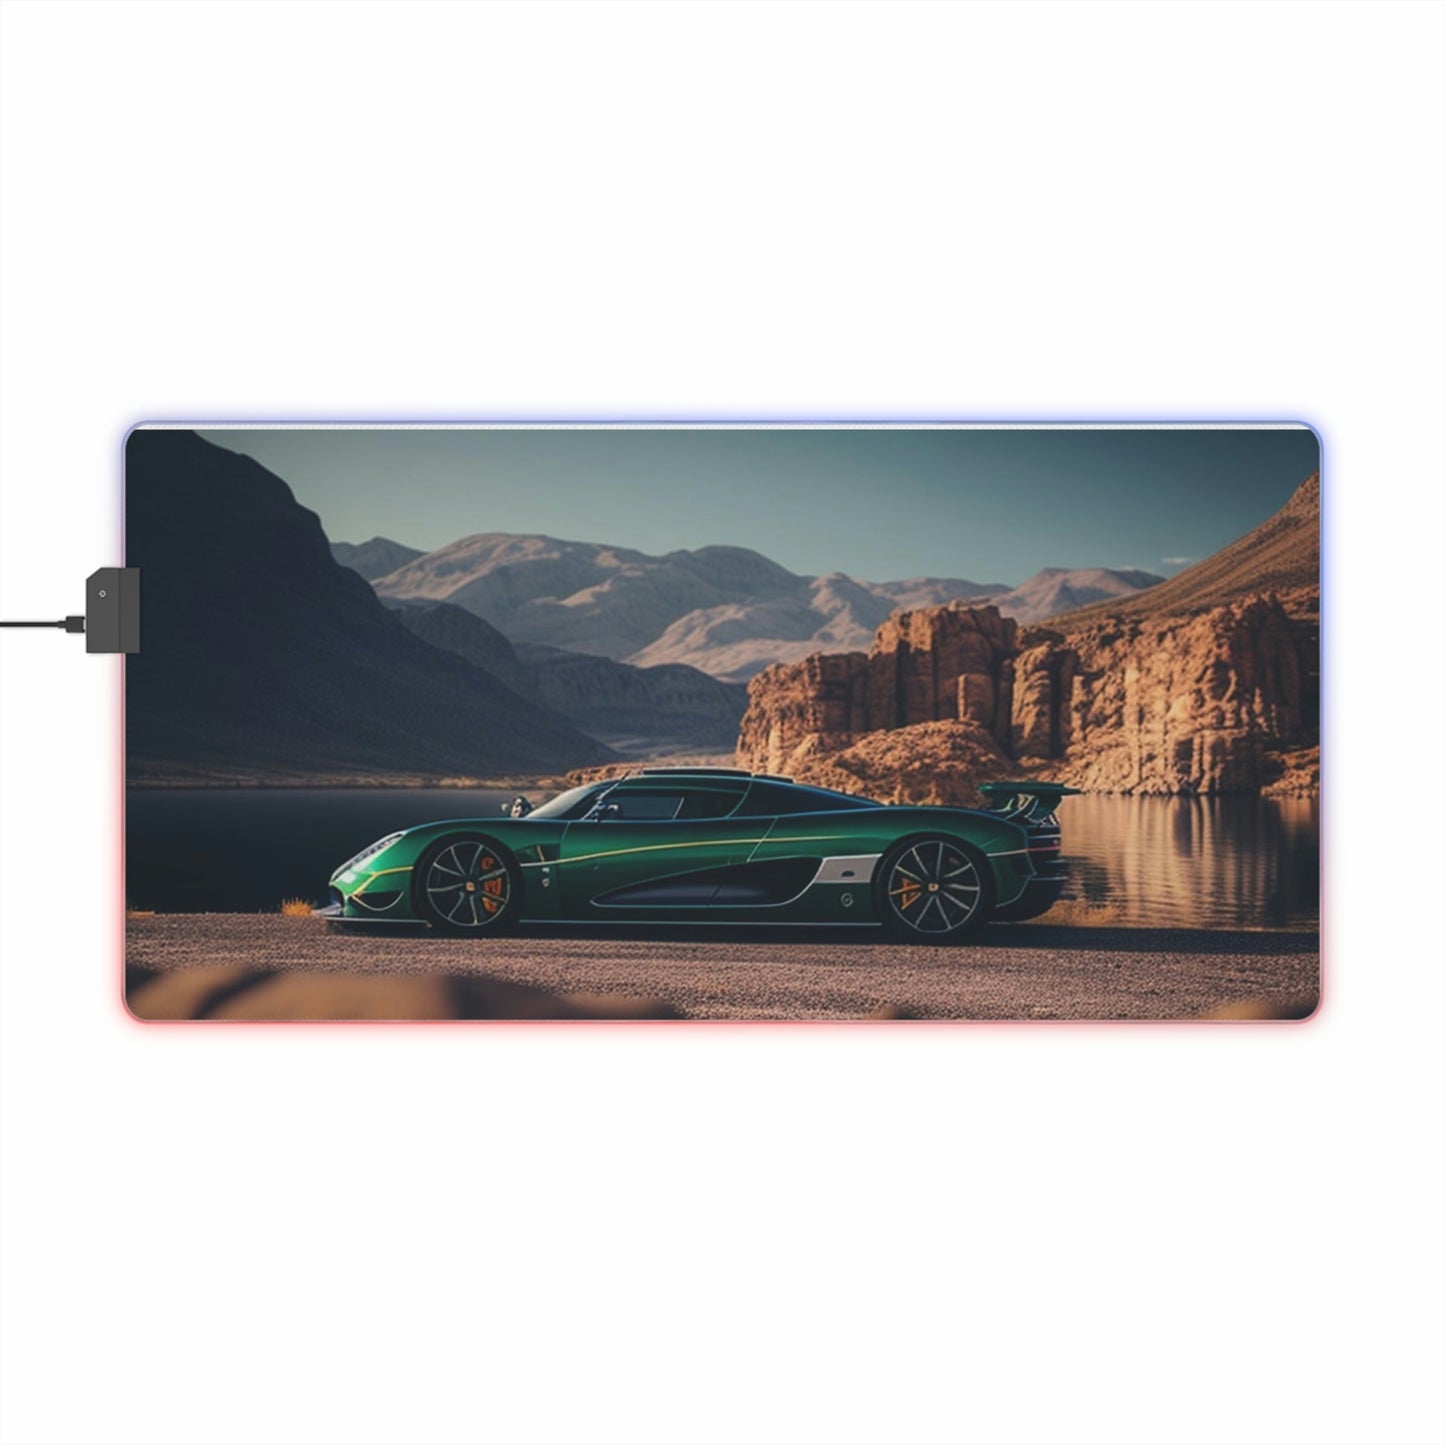 LED Gaming Mouse Pad Koenigsegg Green 3